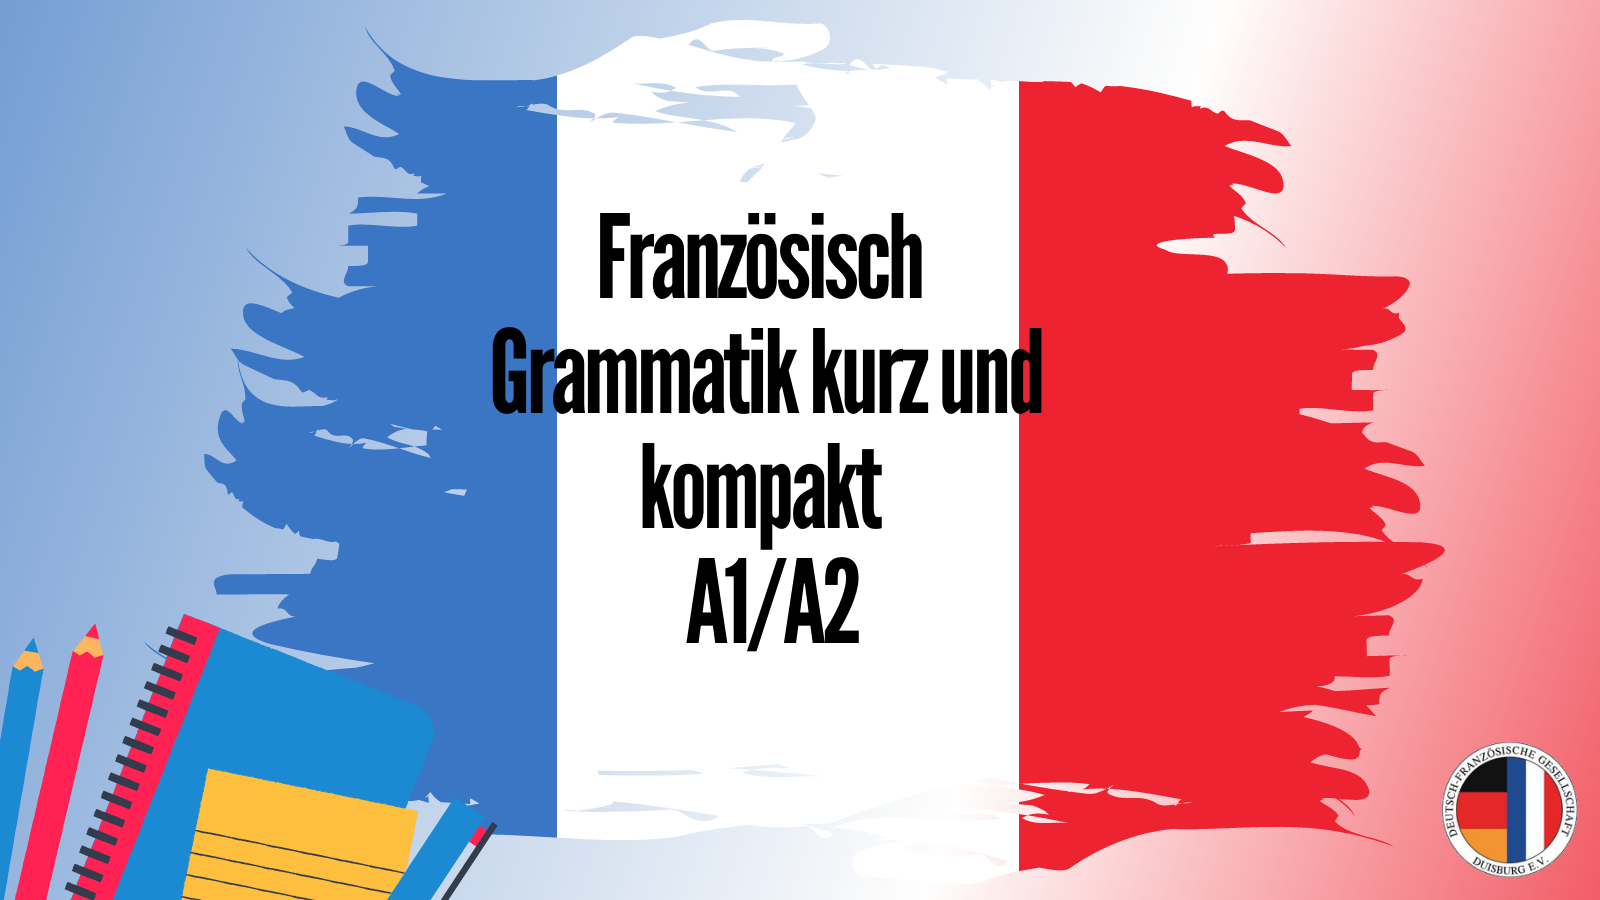 Französisch - Grammatik kurz und kompakt - A1/A2